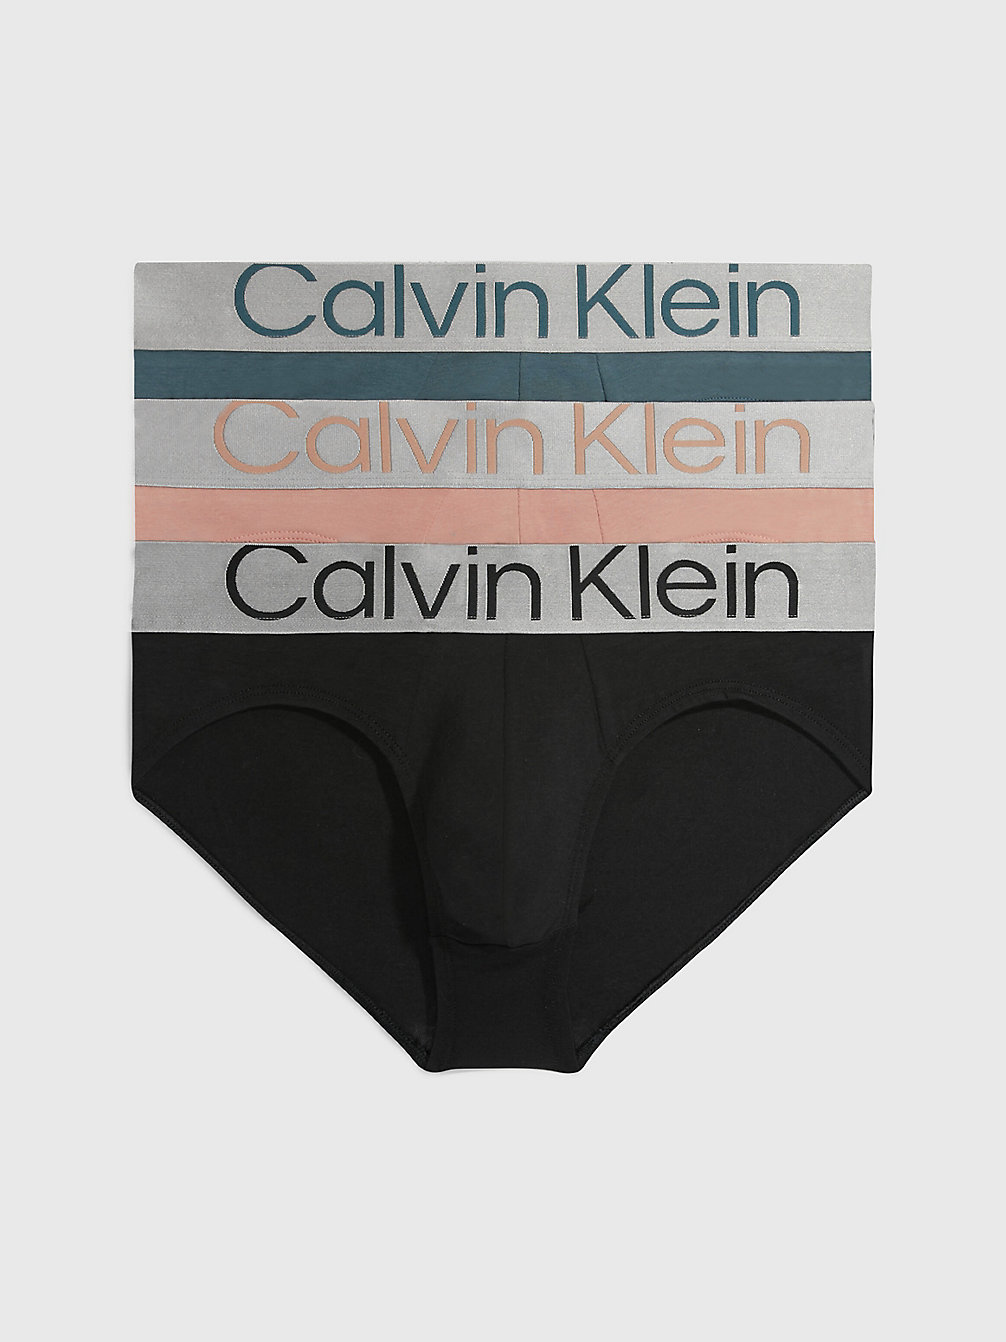 BLUE LAKE/ CLAY/ BLACK > Комплект брифов 3 шт. – Steel Cotton > undefined женщины - Calvin Klein